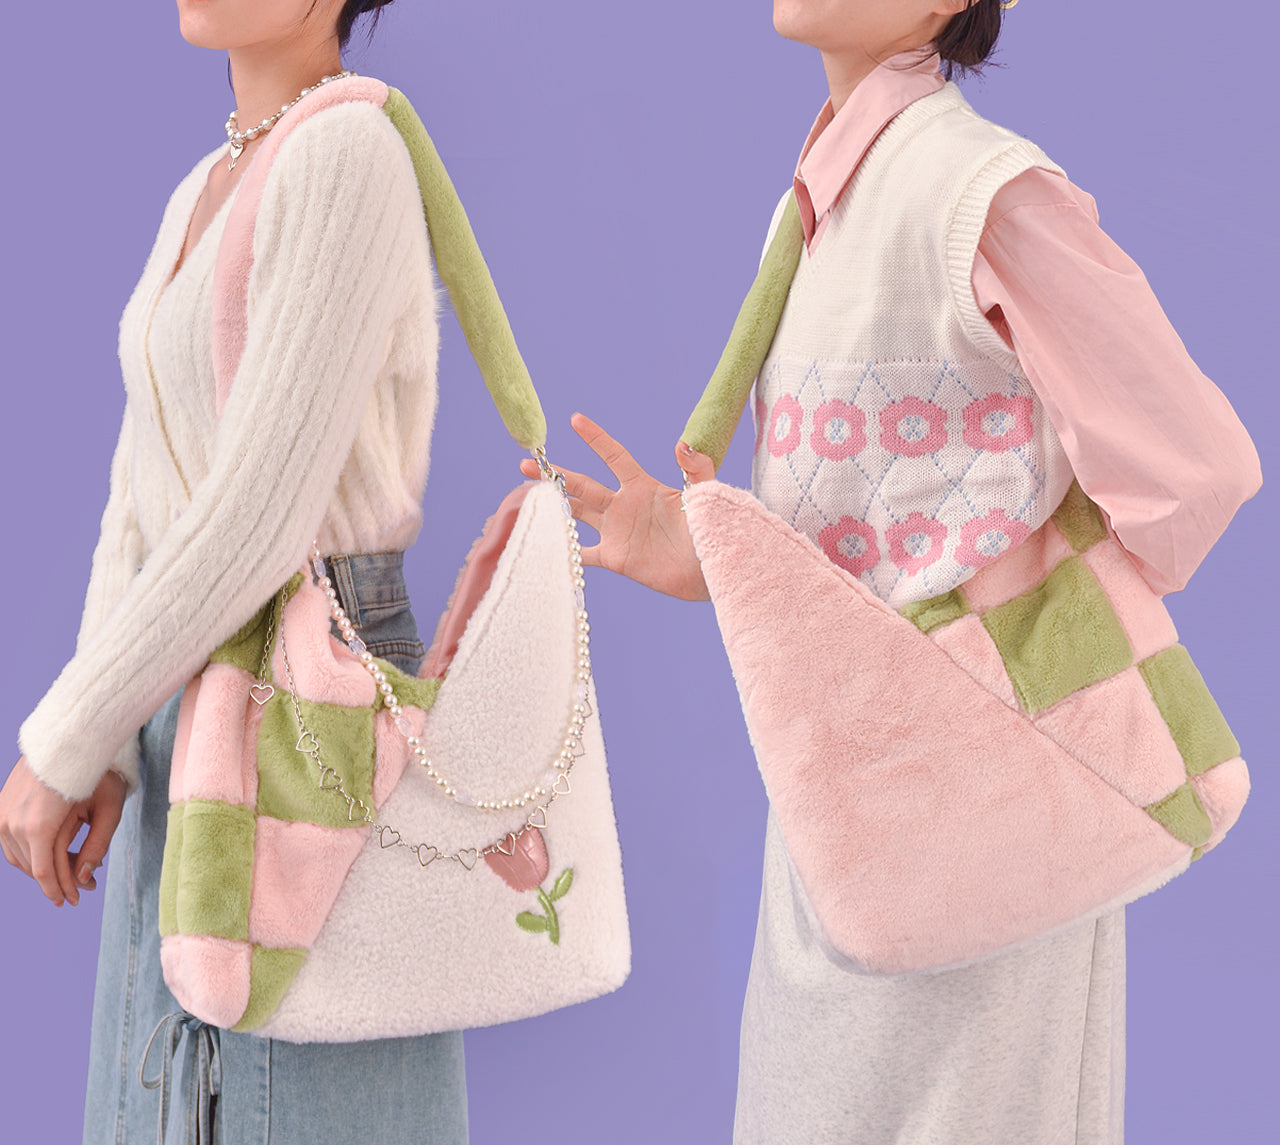 Heart-Shaped Cherry Plush Shoulder Bag